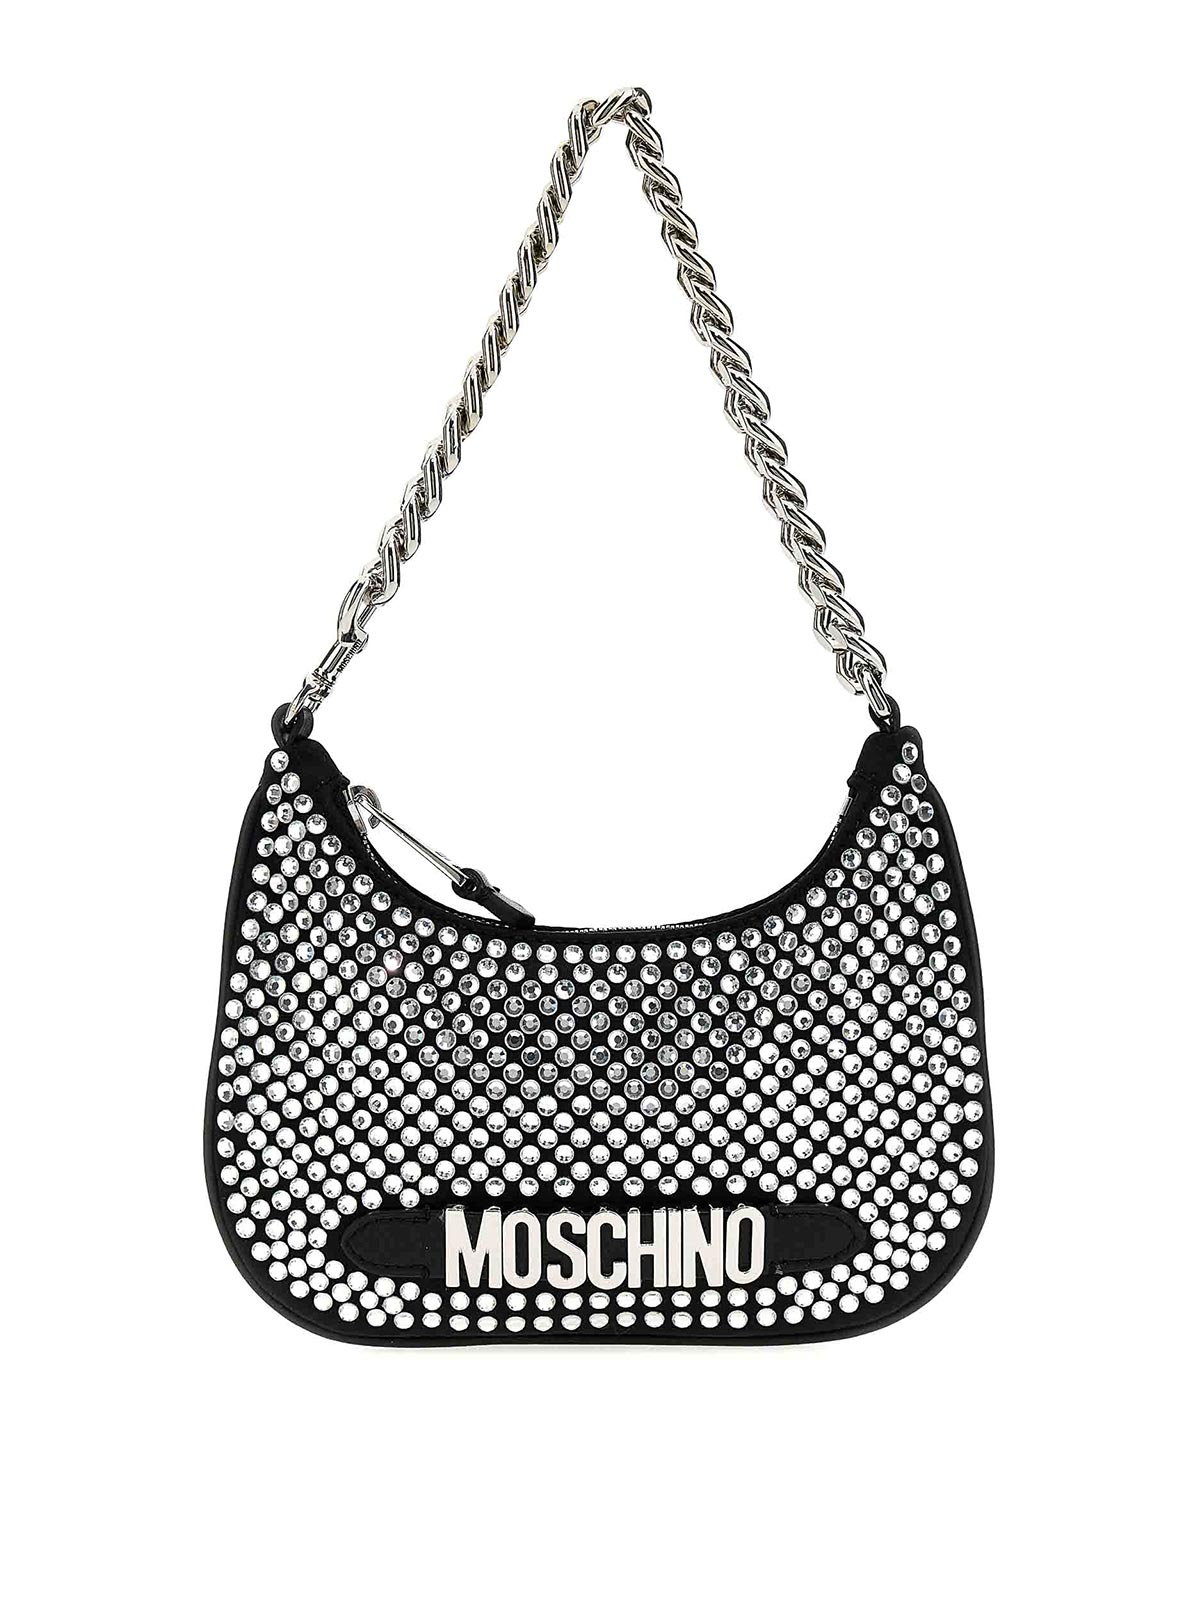 Moschino Logo Crystal Handbag In Black